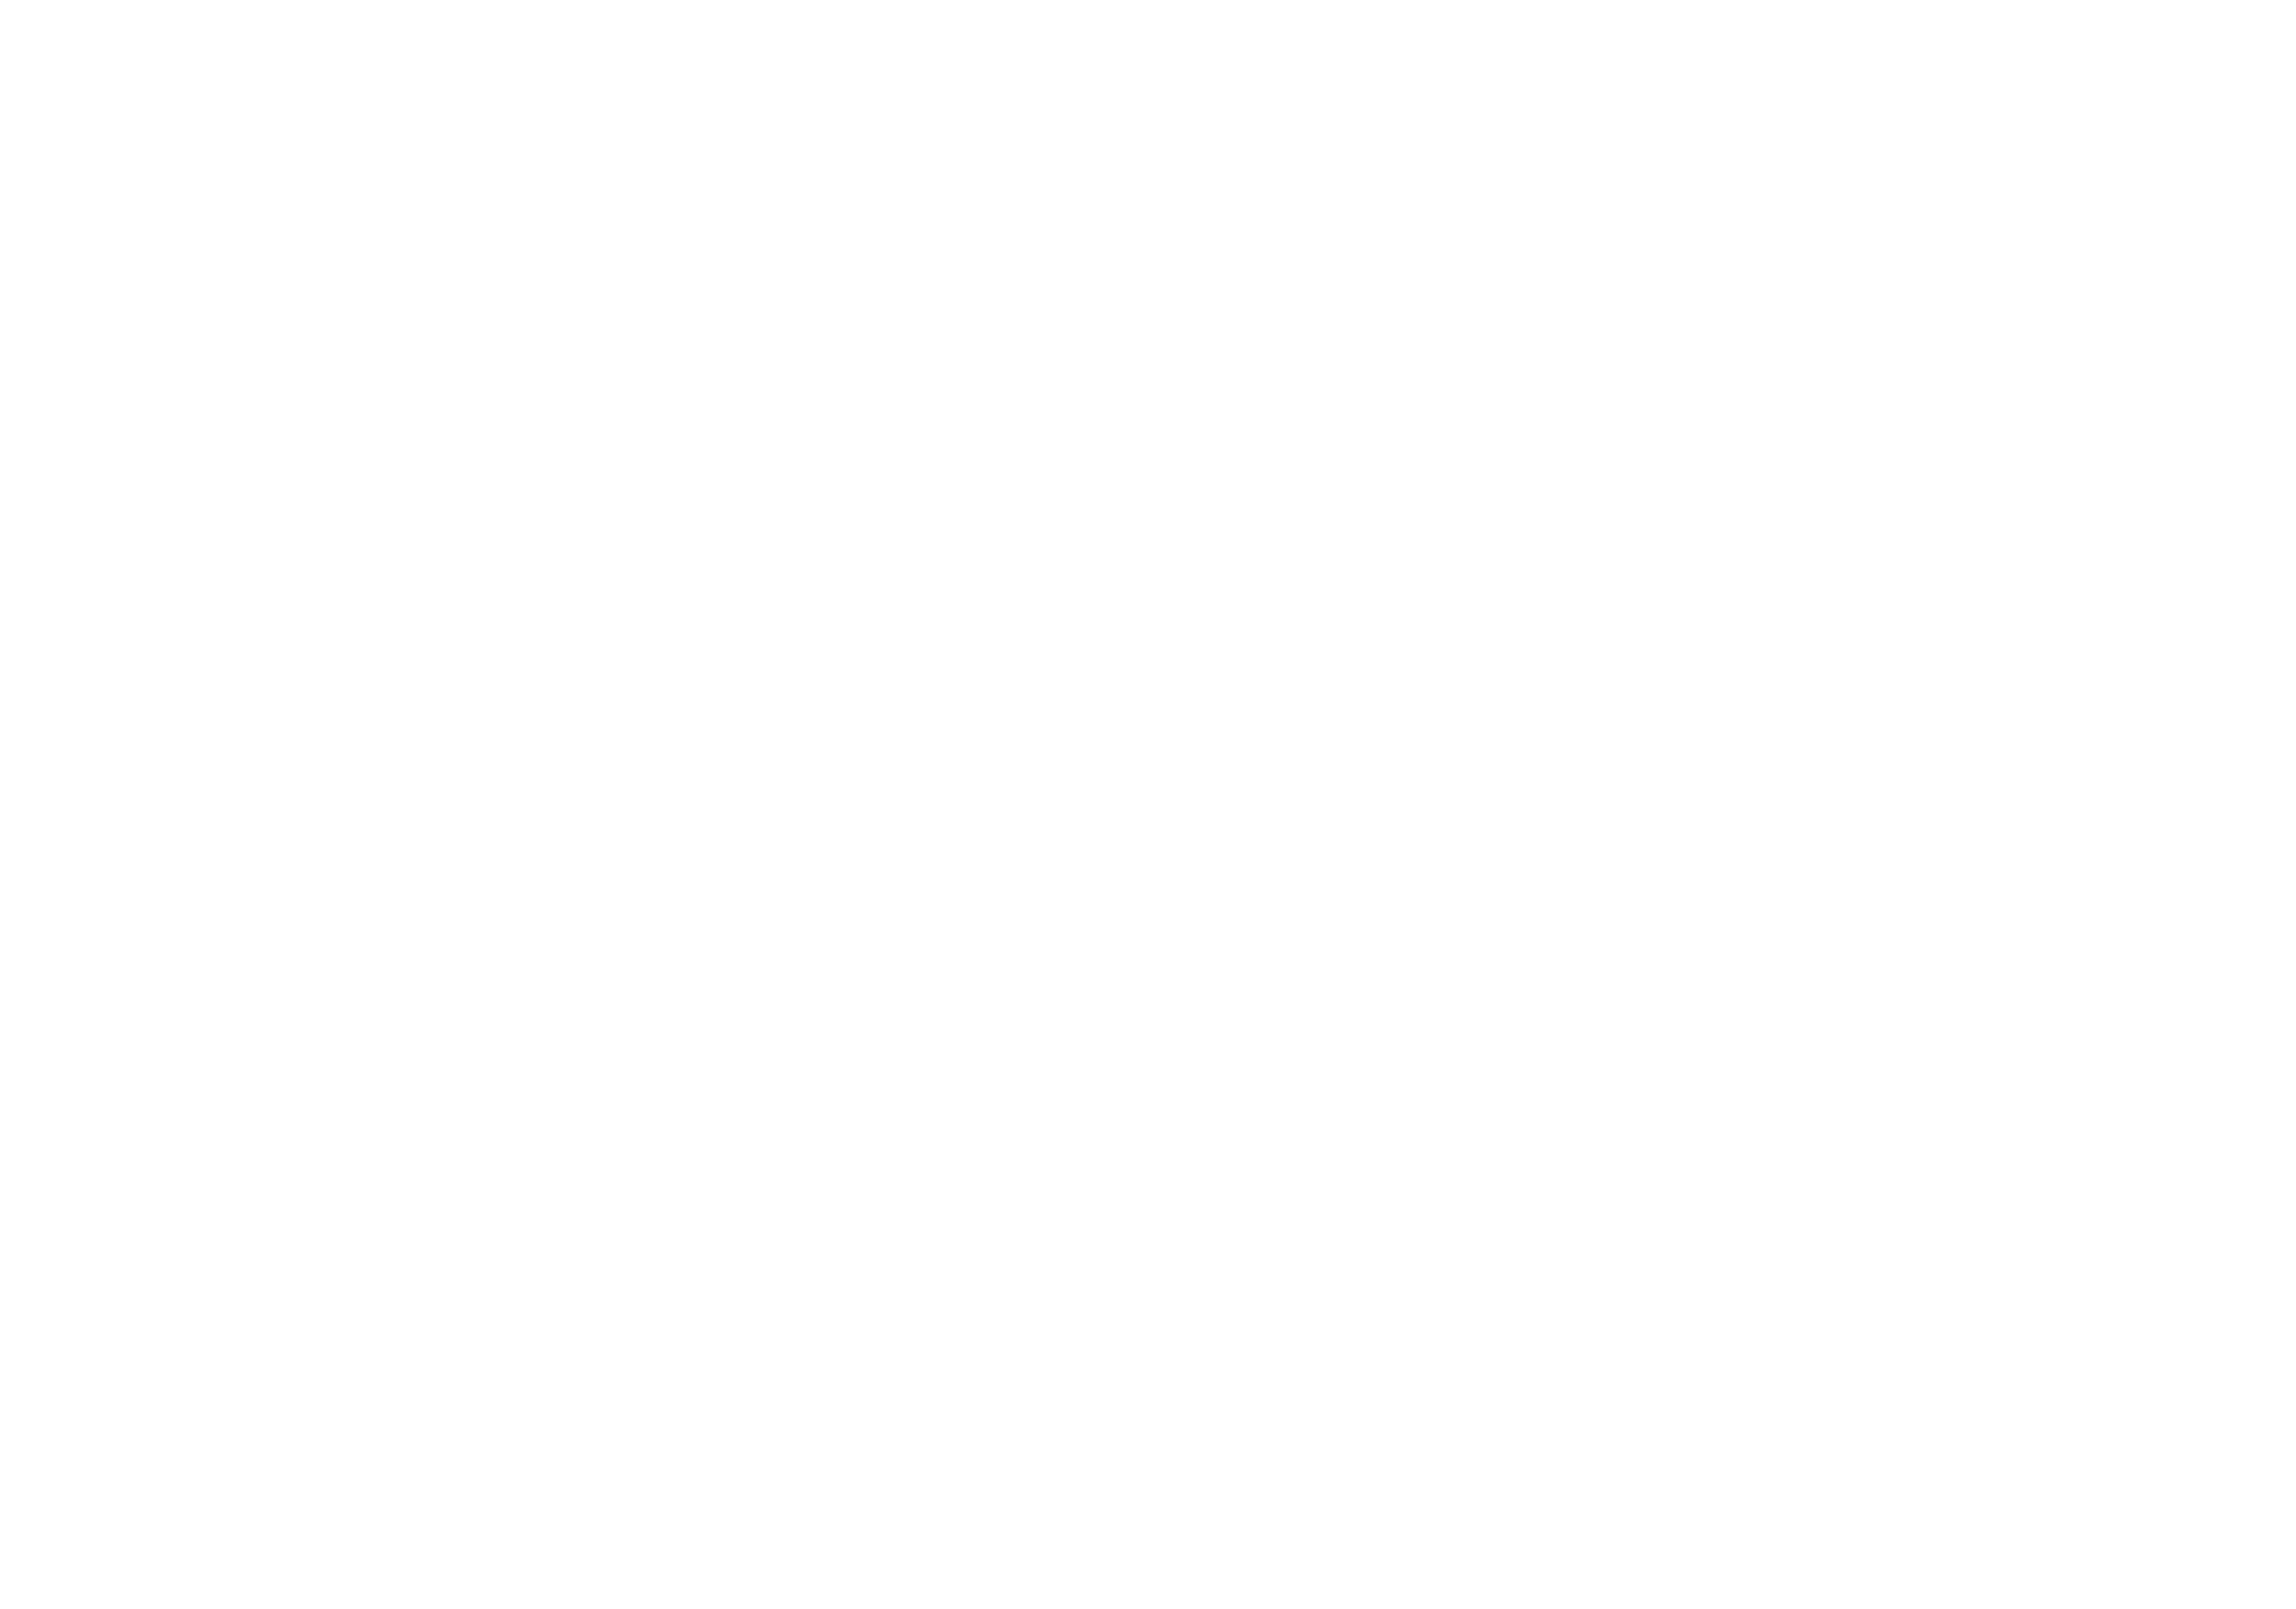 Hung Thinh Land